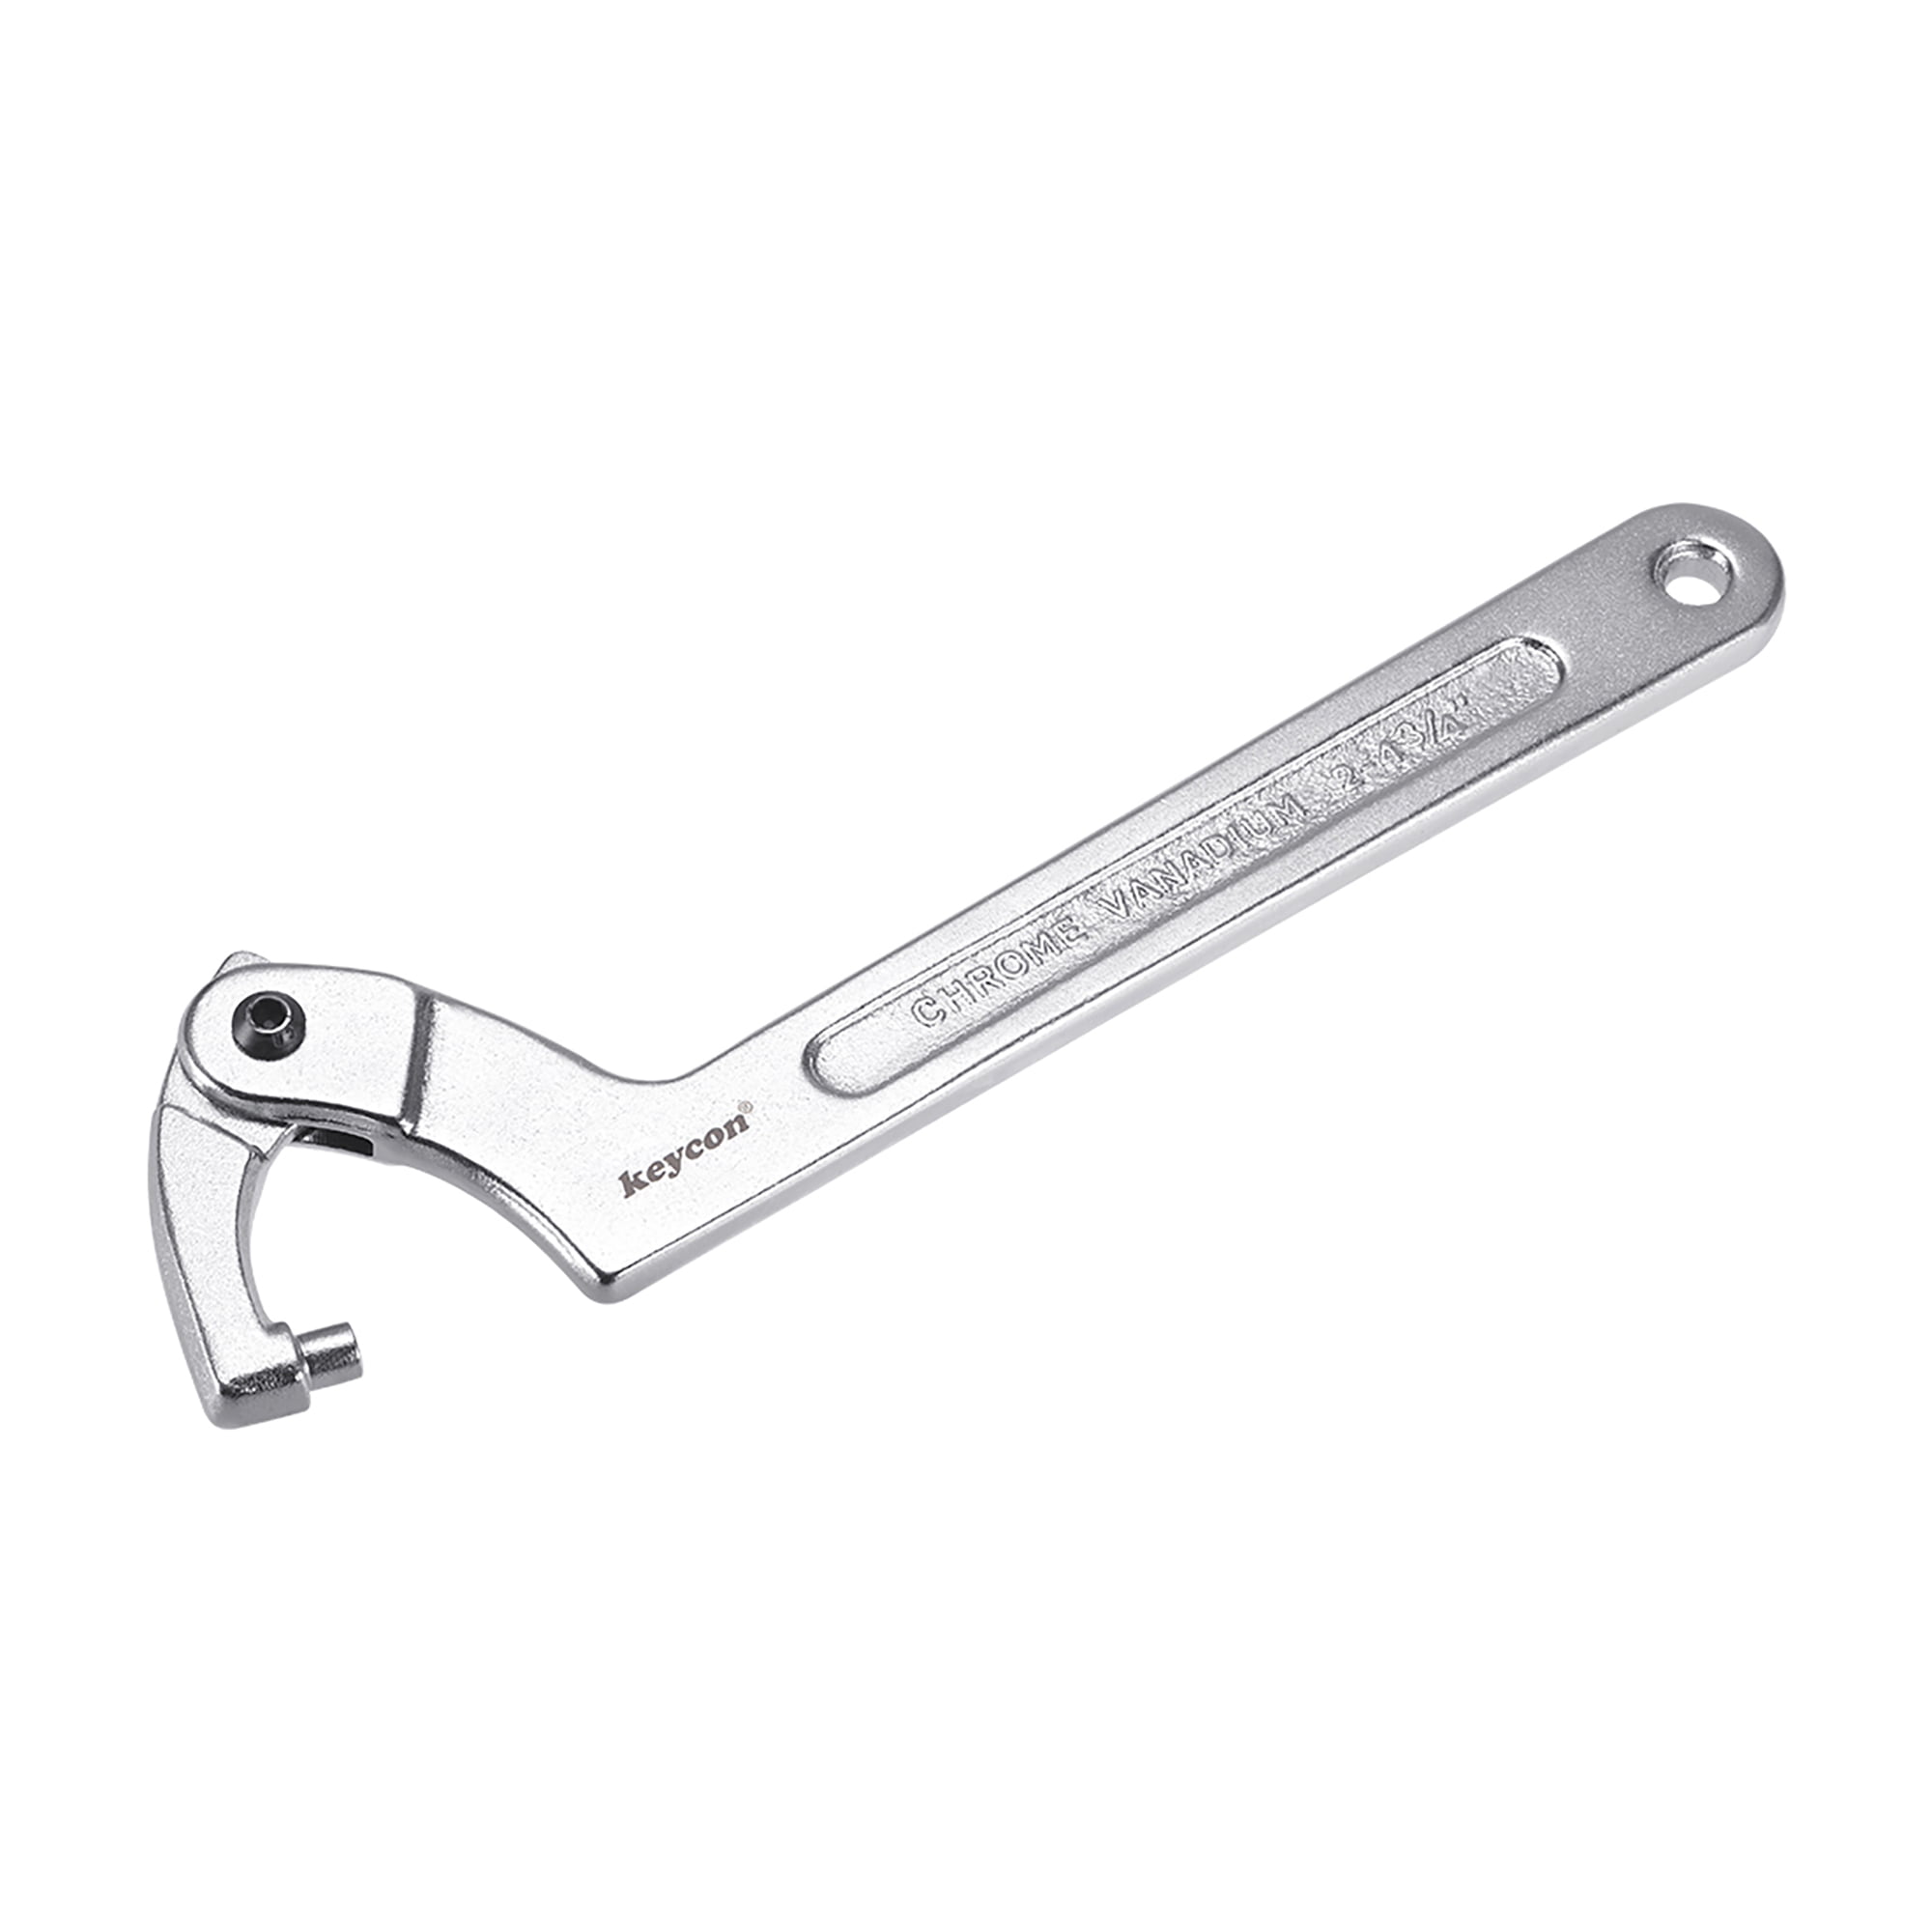 8 Types Heavy Duty Chrome Vanadium Adjustable Hook Wrench C Spanner Tools